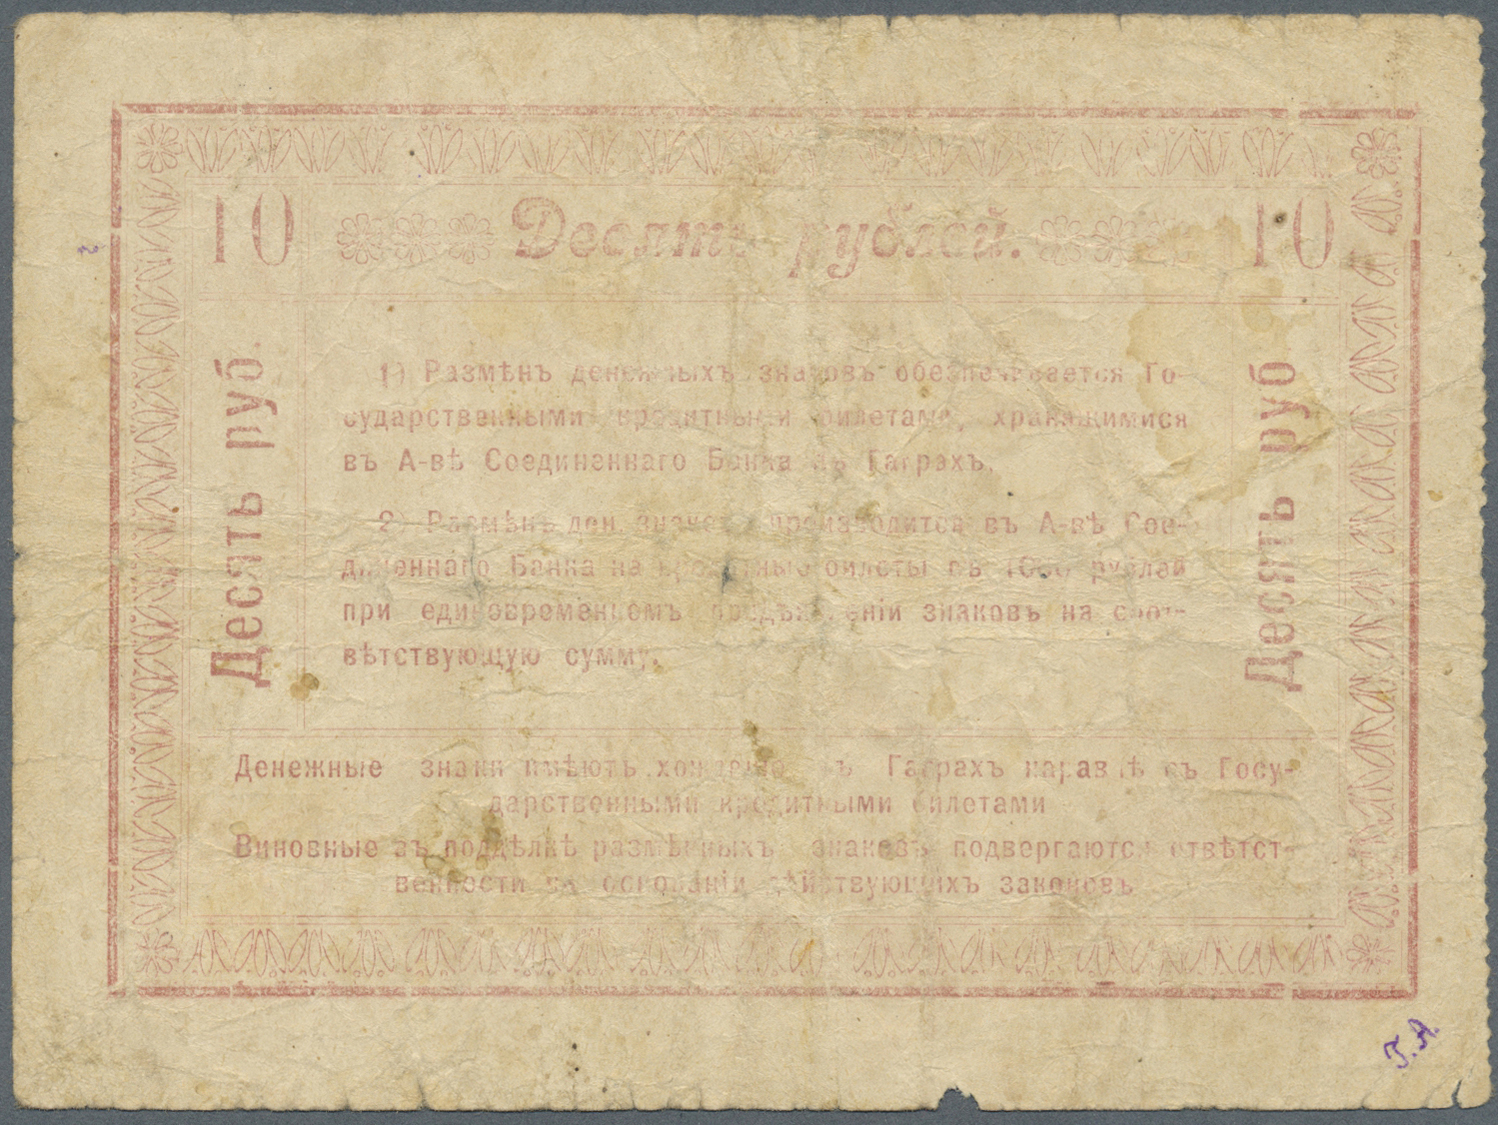 00881 Georgia / Georgien: City Government Of The City Of Gagra 10 Rubles ND(1918), P.NL (Kardakov K.8.13.12), Well Worn - Georgia